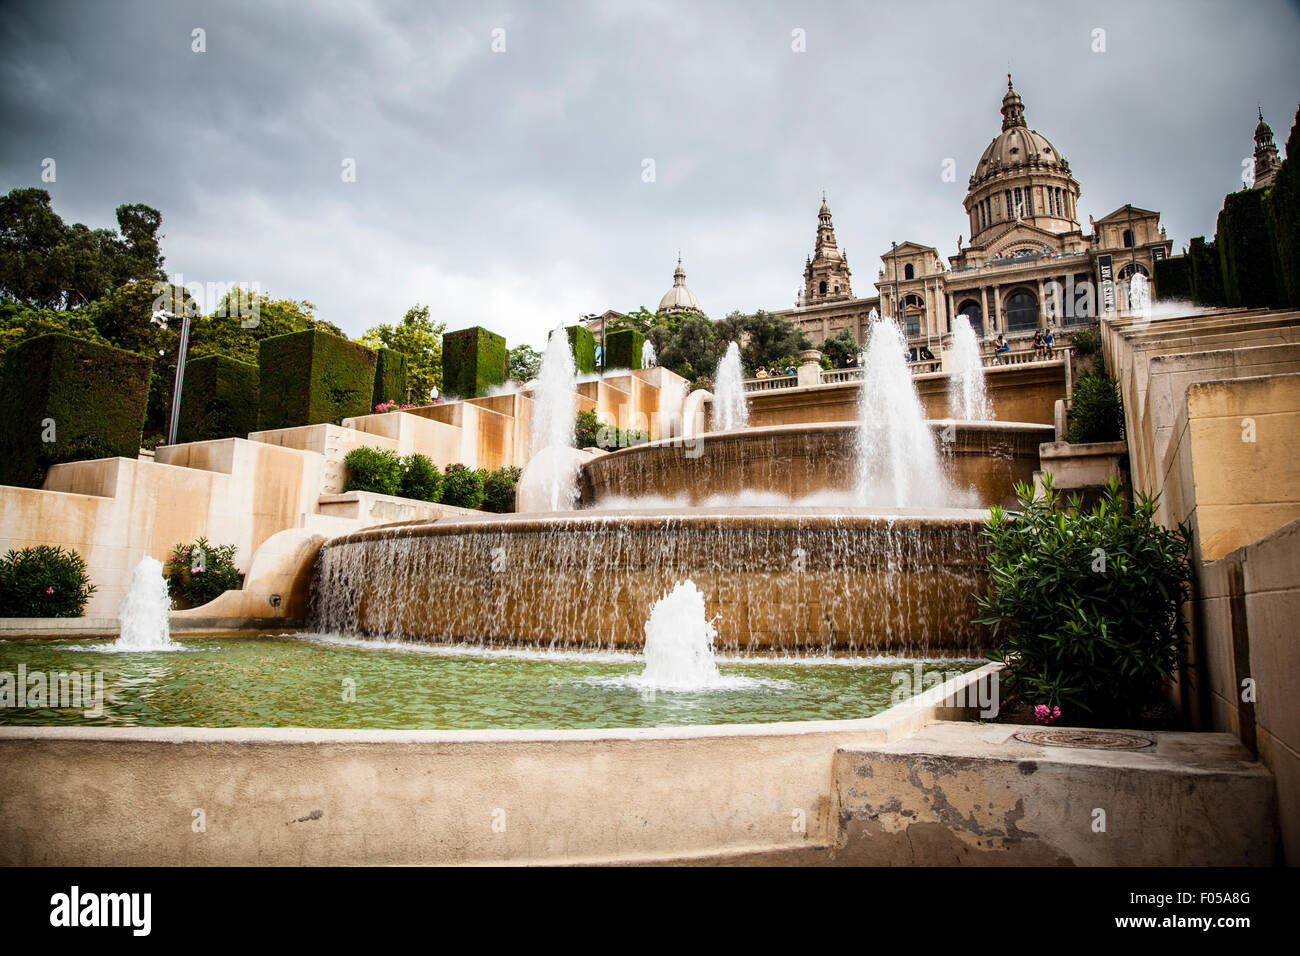 Placa De Espanya, the National Museum in Barcelona. Spain Stock Photo